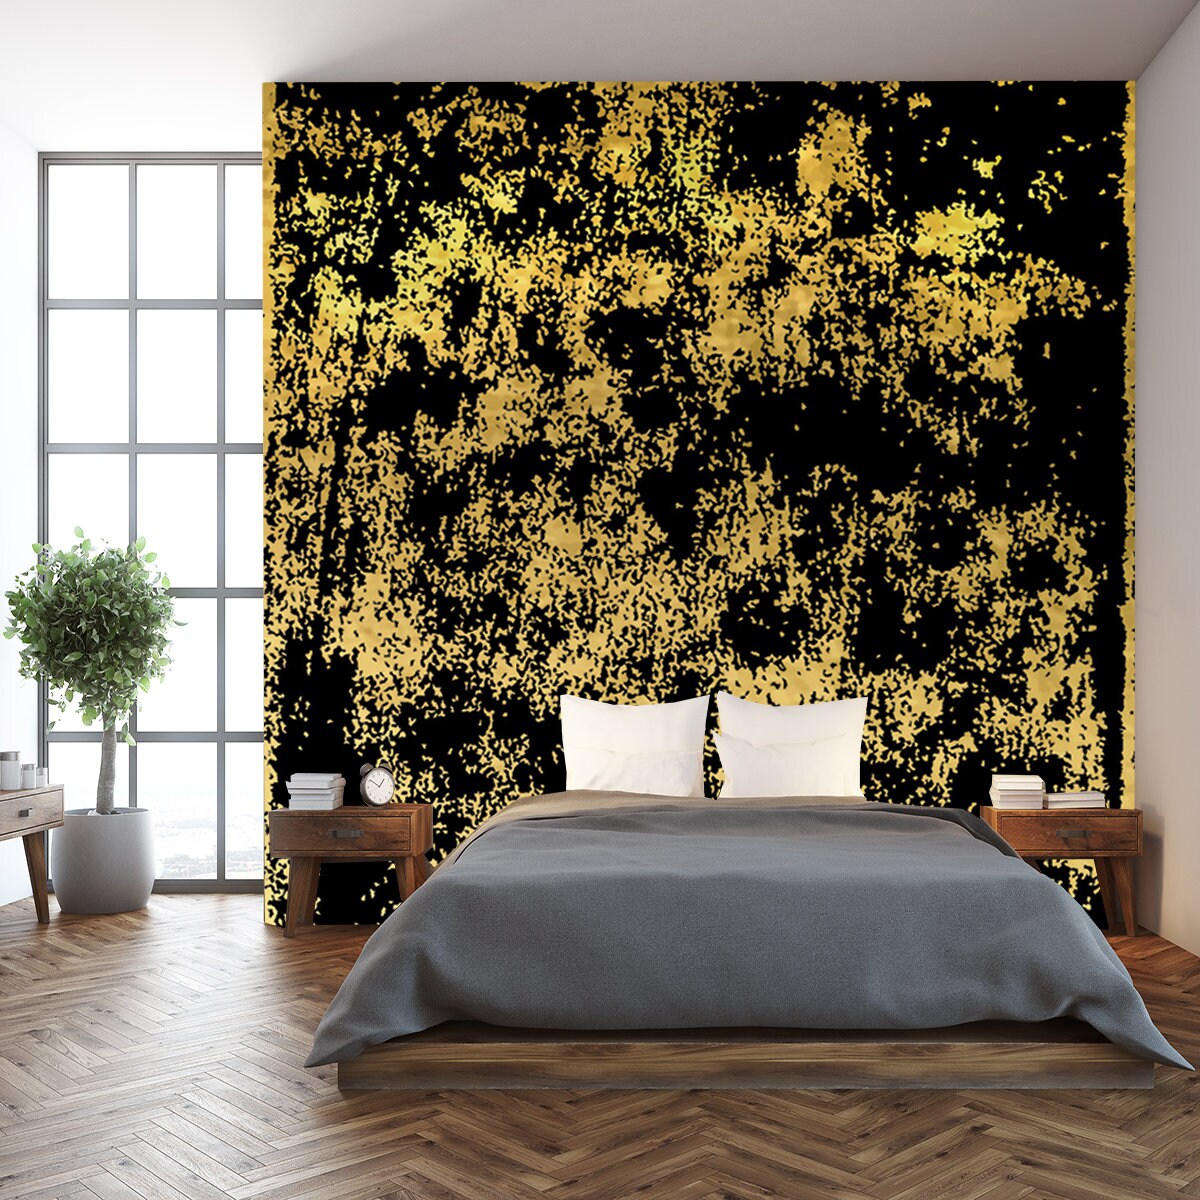 Gold Marbling Texture Design. Grunge Gold Background Wallpaper Bedroom Mural